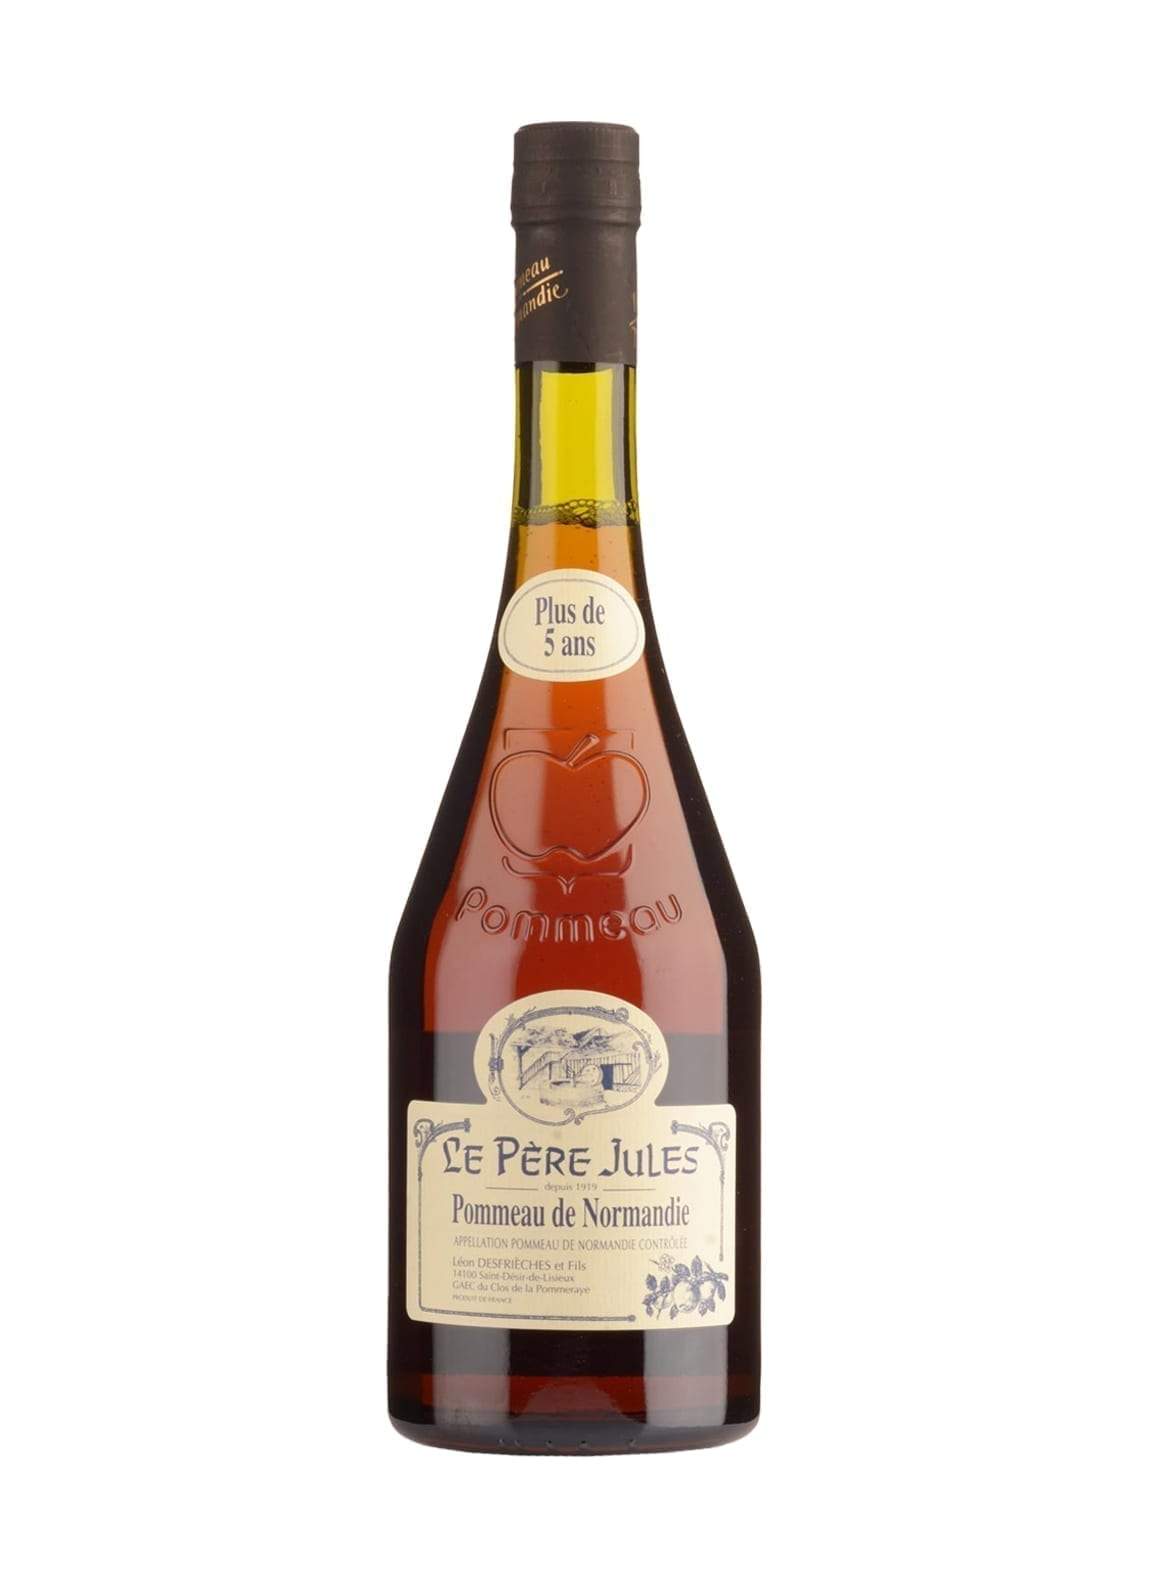 Pere Jules Pommeau de Normandie AOC (apple juice + Calvados) 5 years 17% 700ml | Hard Cider | Shop online at Spirits of France